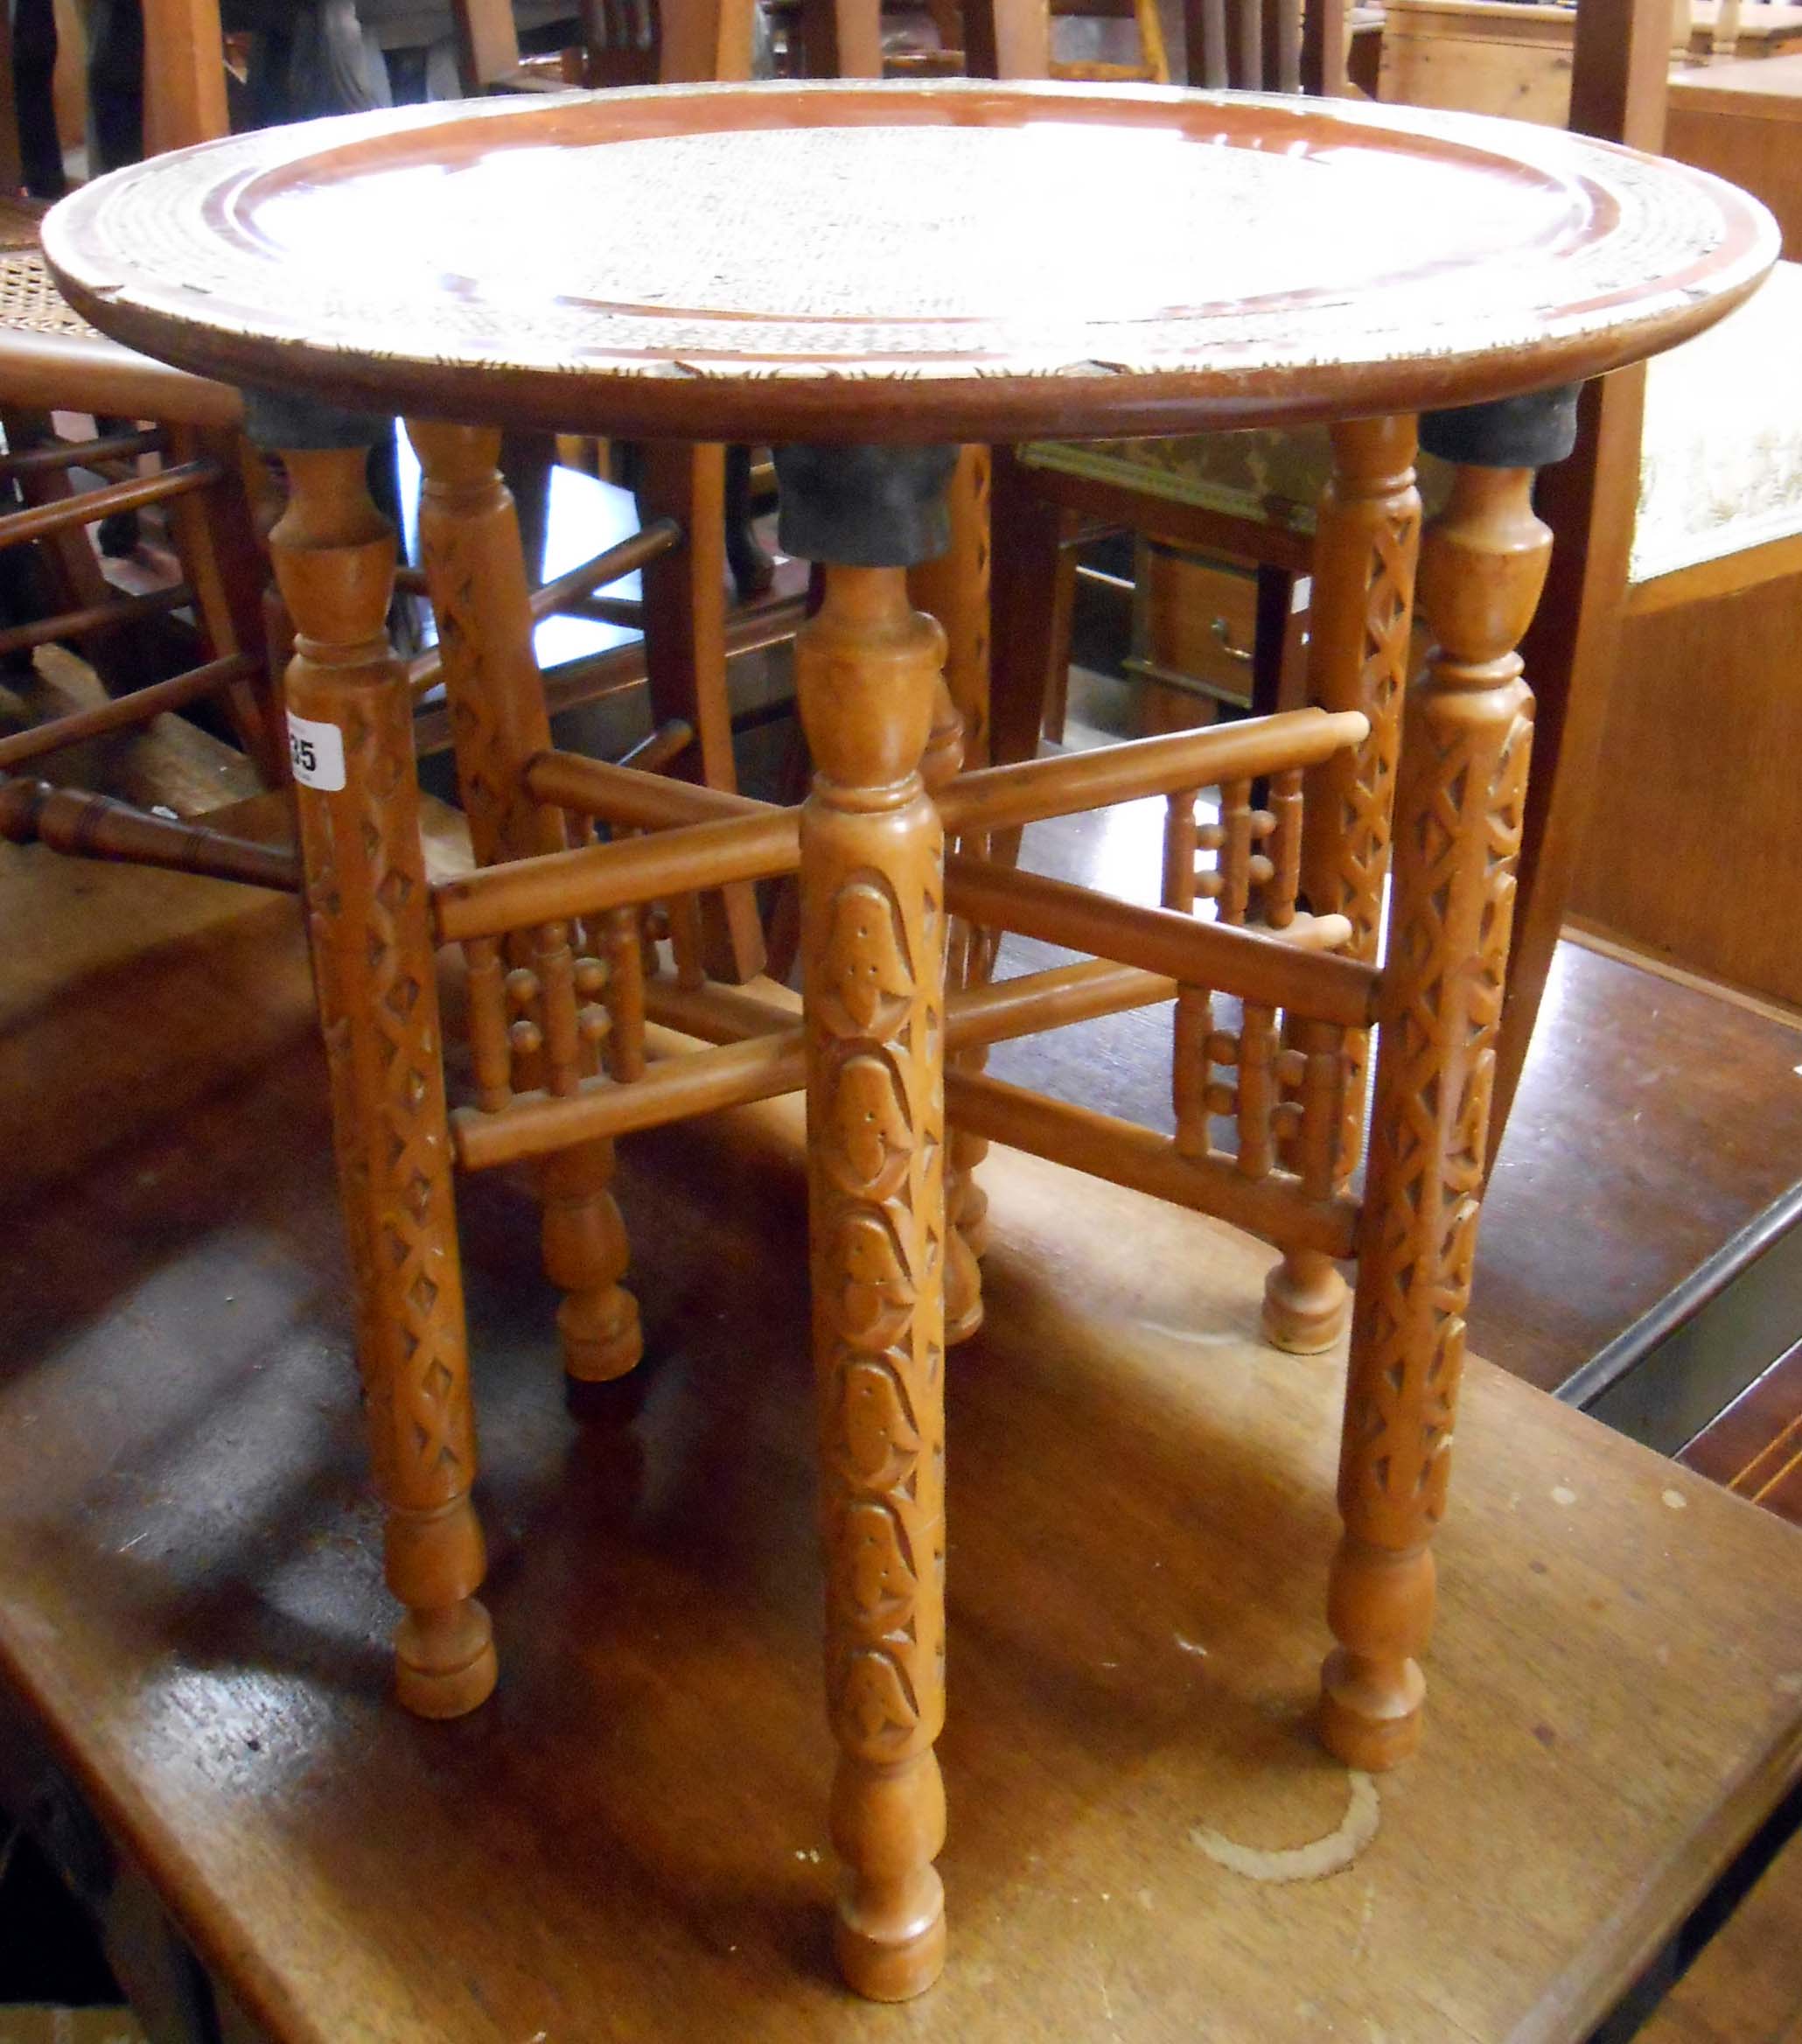 A 50.5cm diameter 20th Century Islamic Khatam inlaid topped table, set on decorative folding